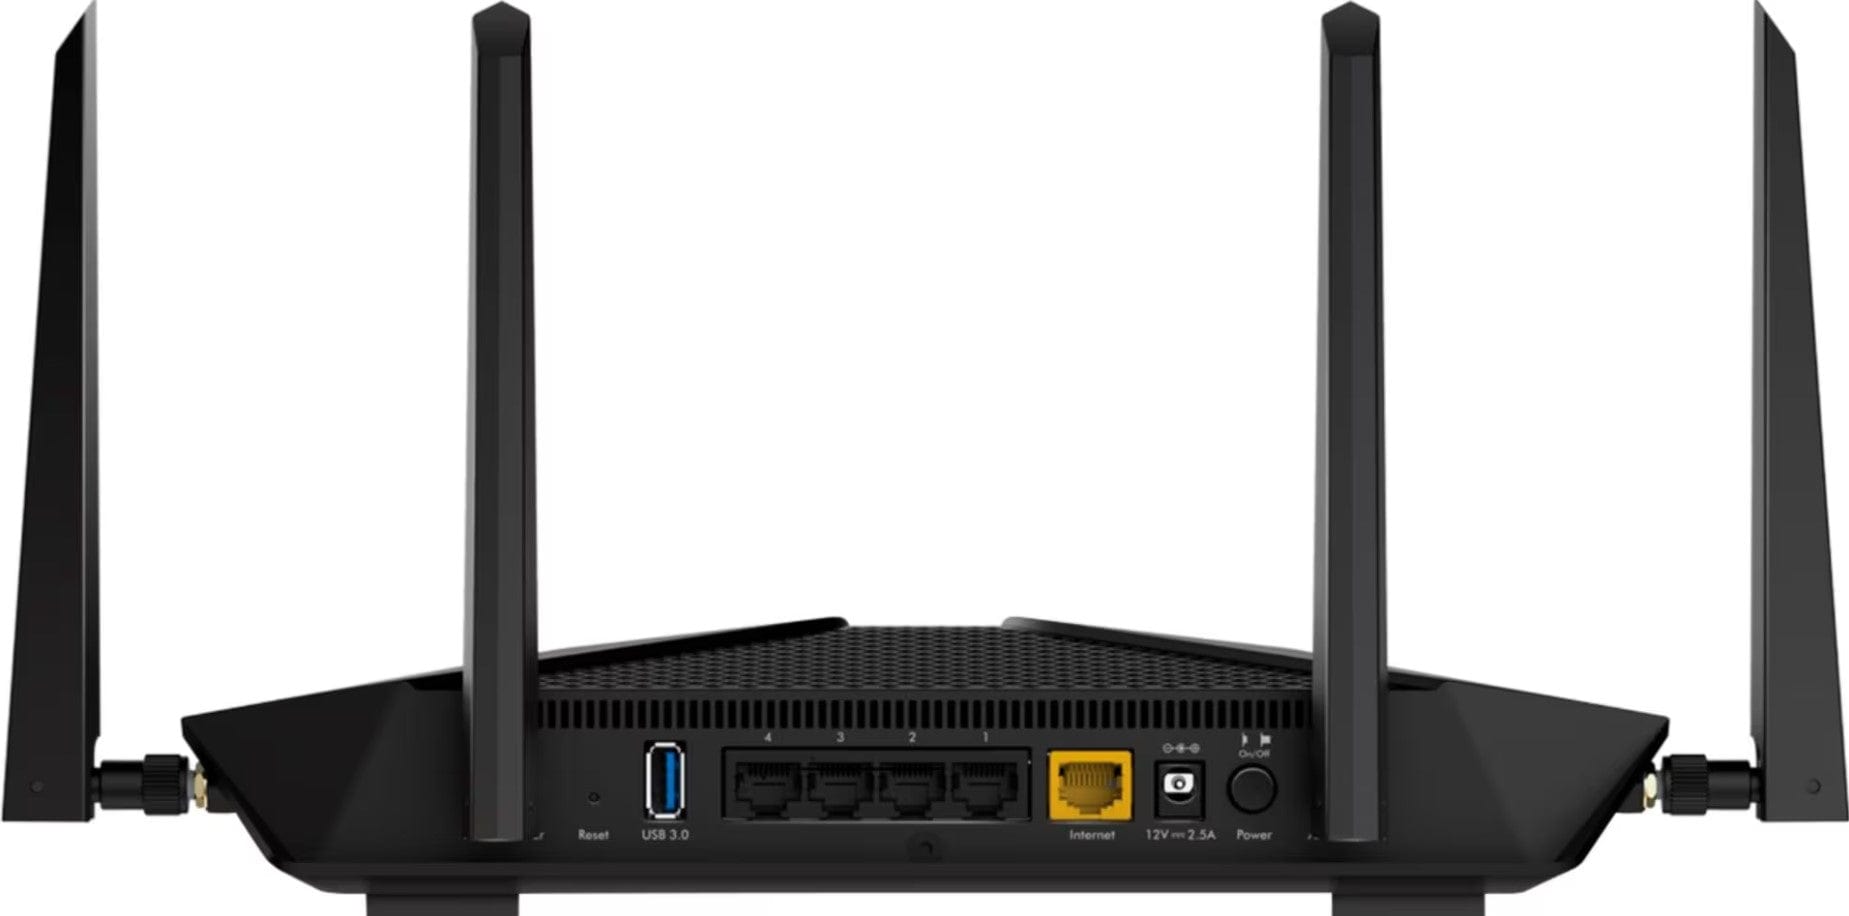 Netgear RAX54S-100NAS Nighthawk AX6 6-Stream AX5400 WiFi Router